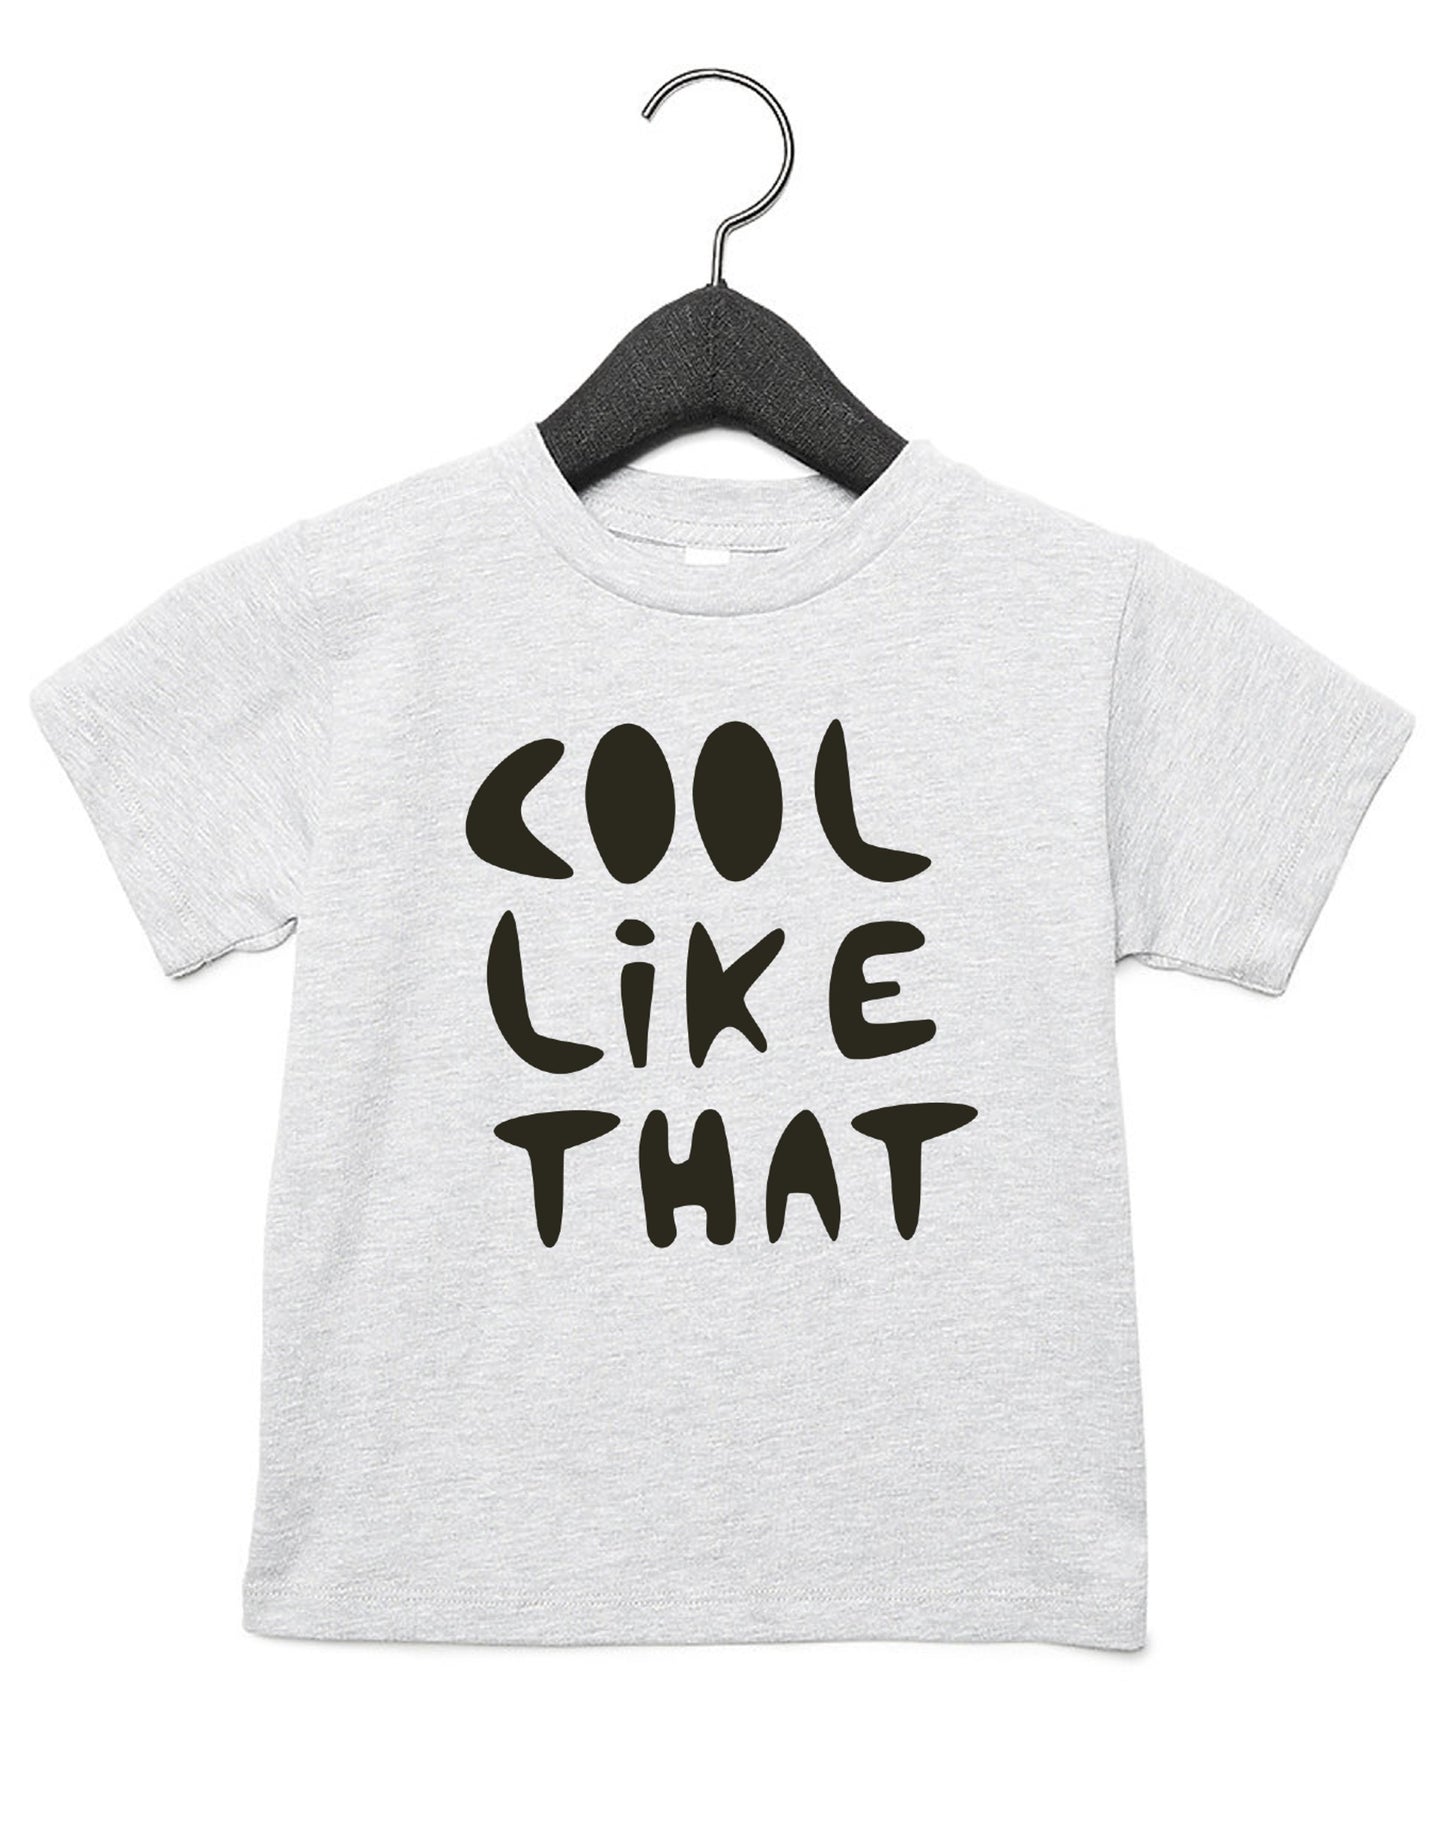 Cool Like That Kids T-Shirt